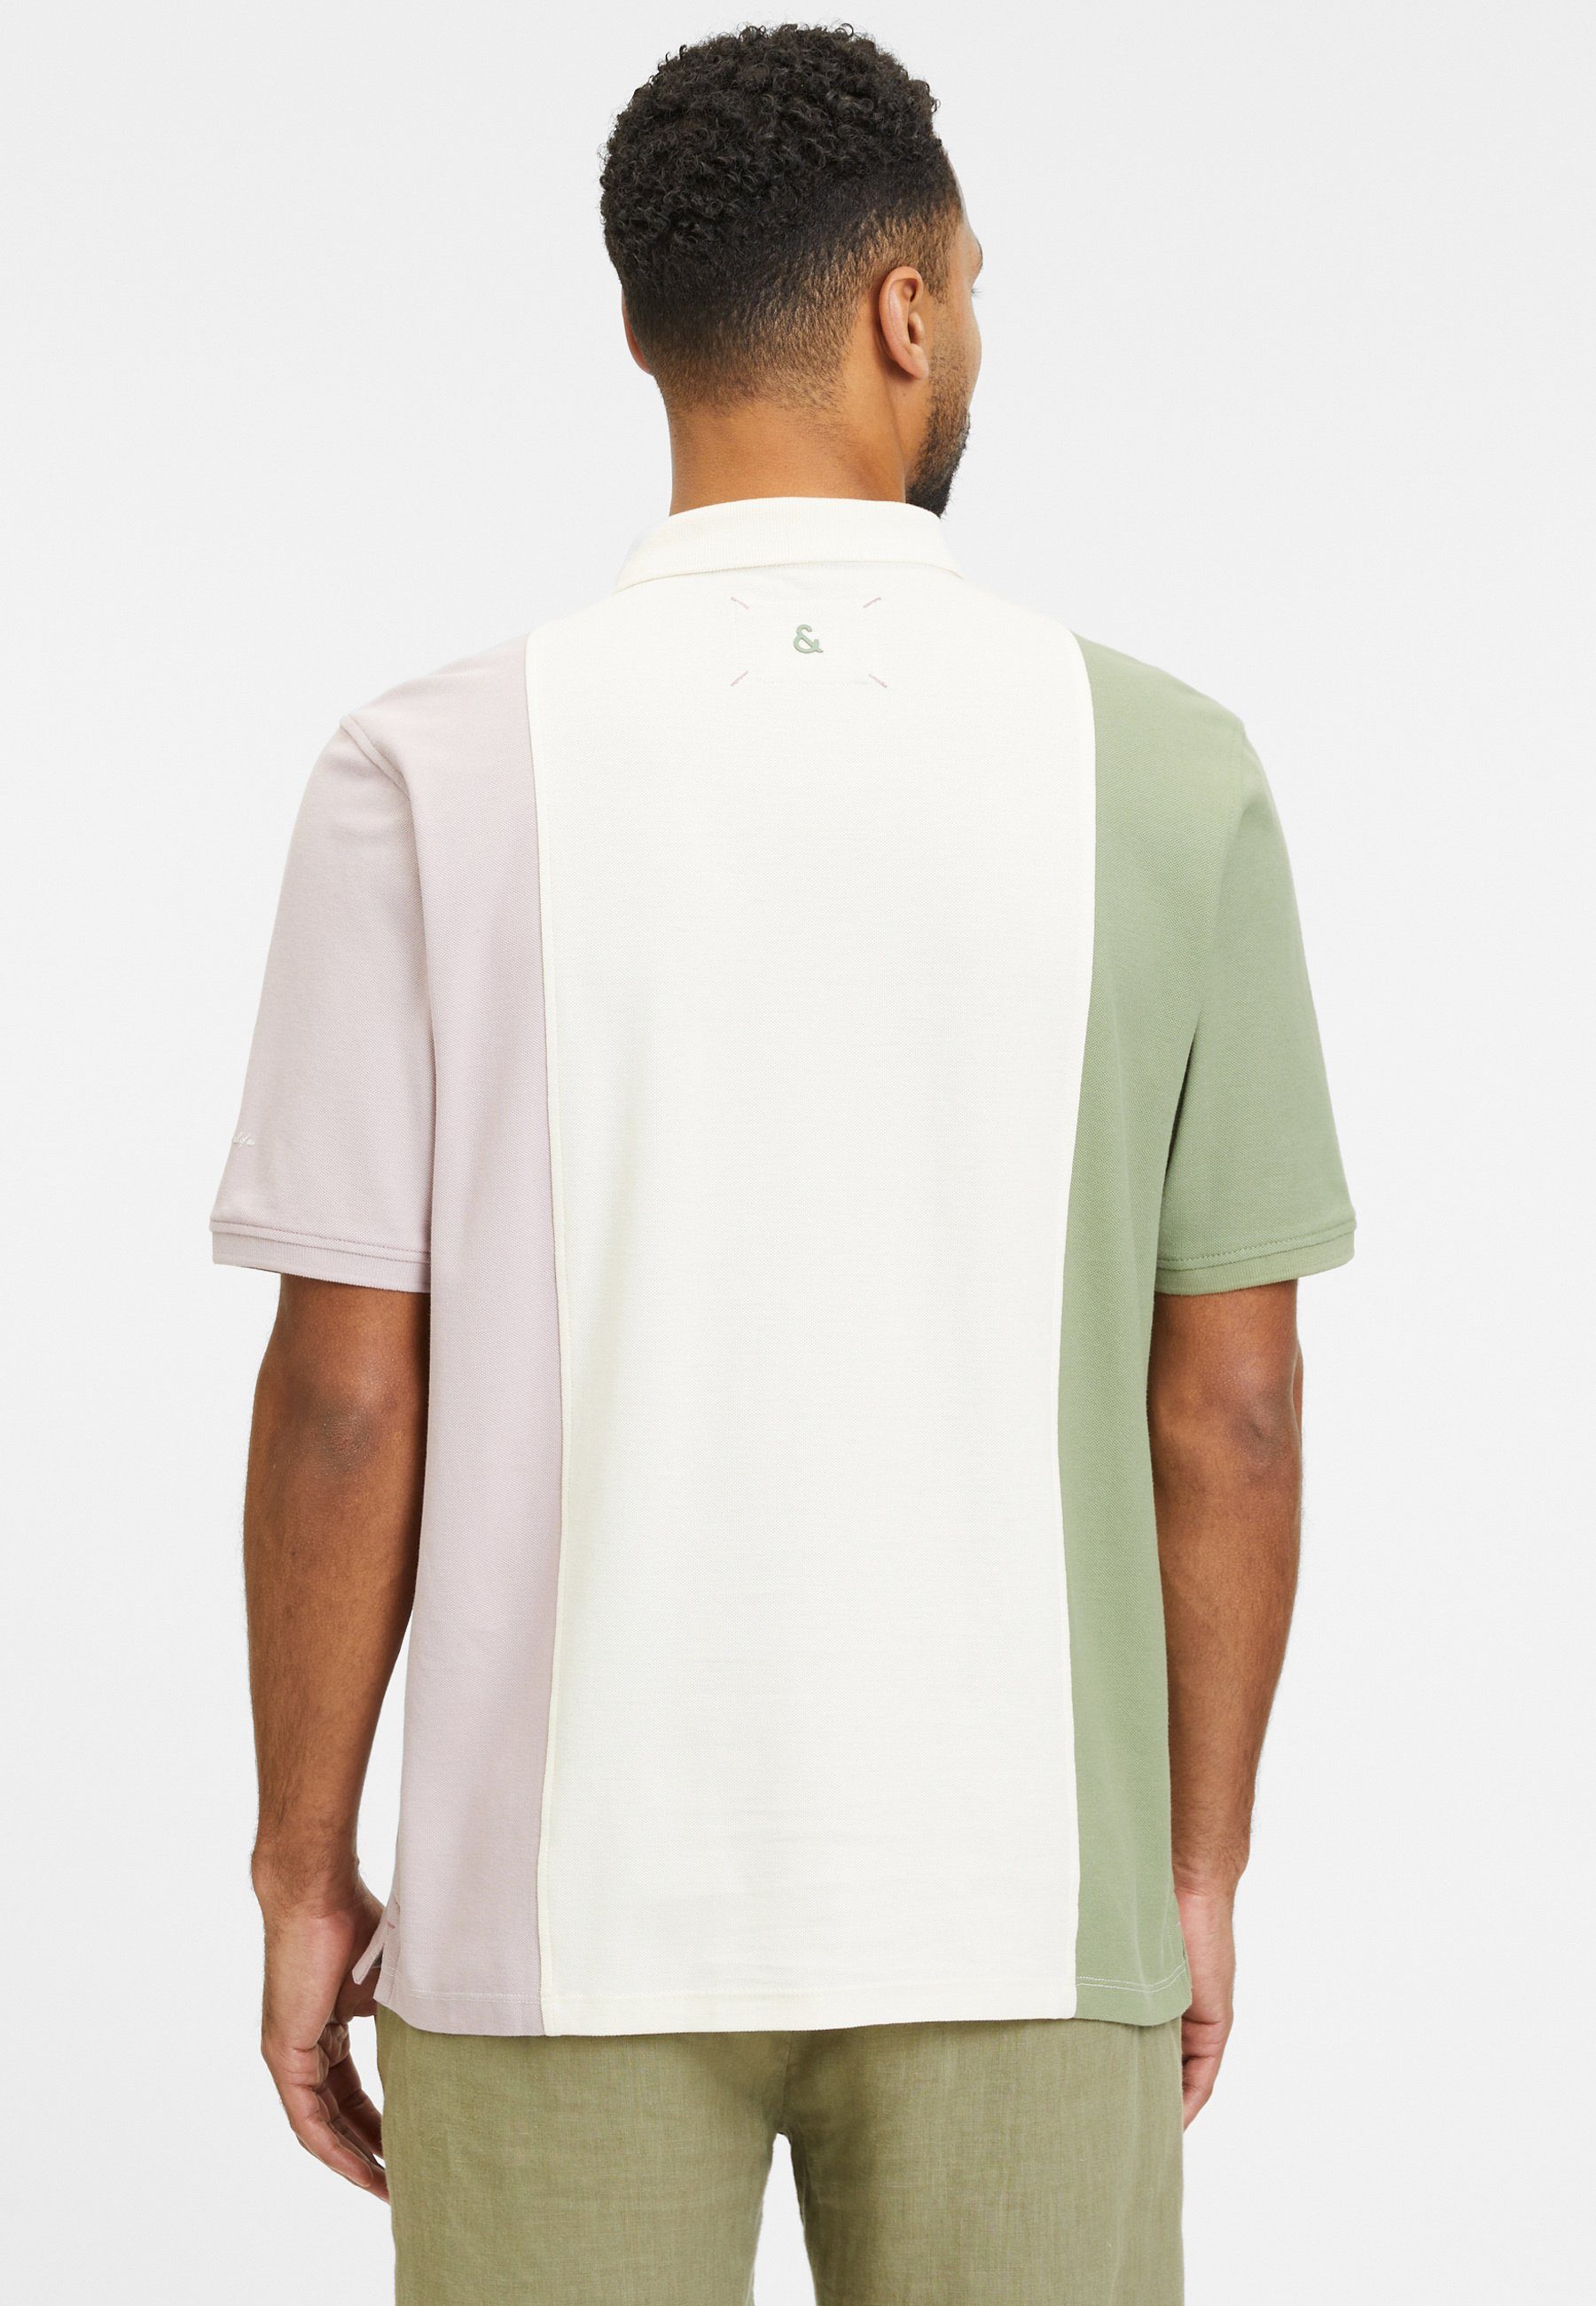 modernem Design sons Poloshirt colours & Colourblock 2 Poloshirt mit